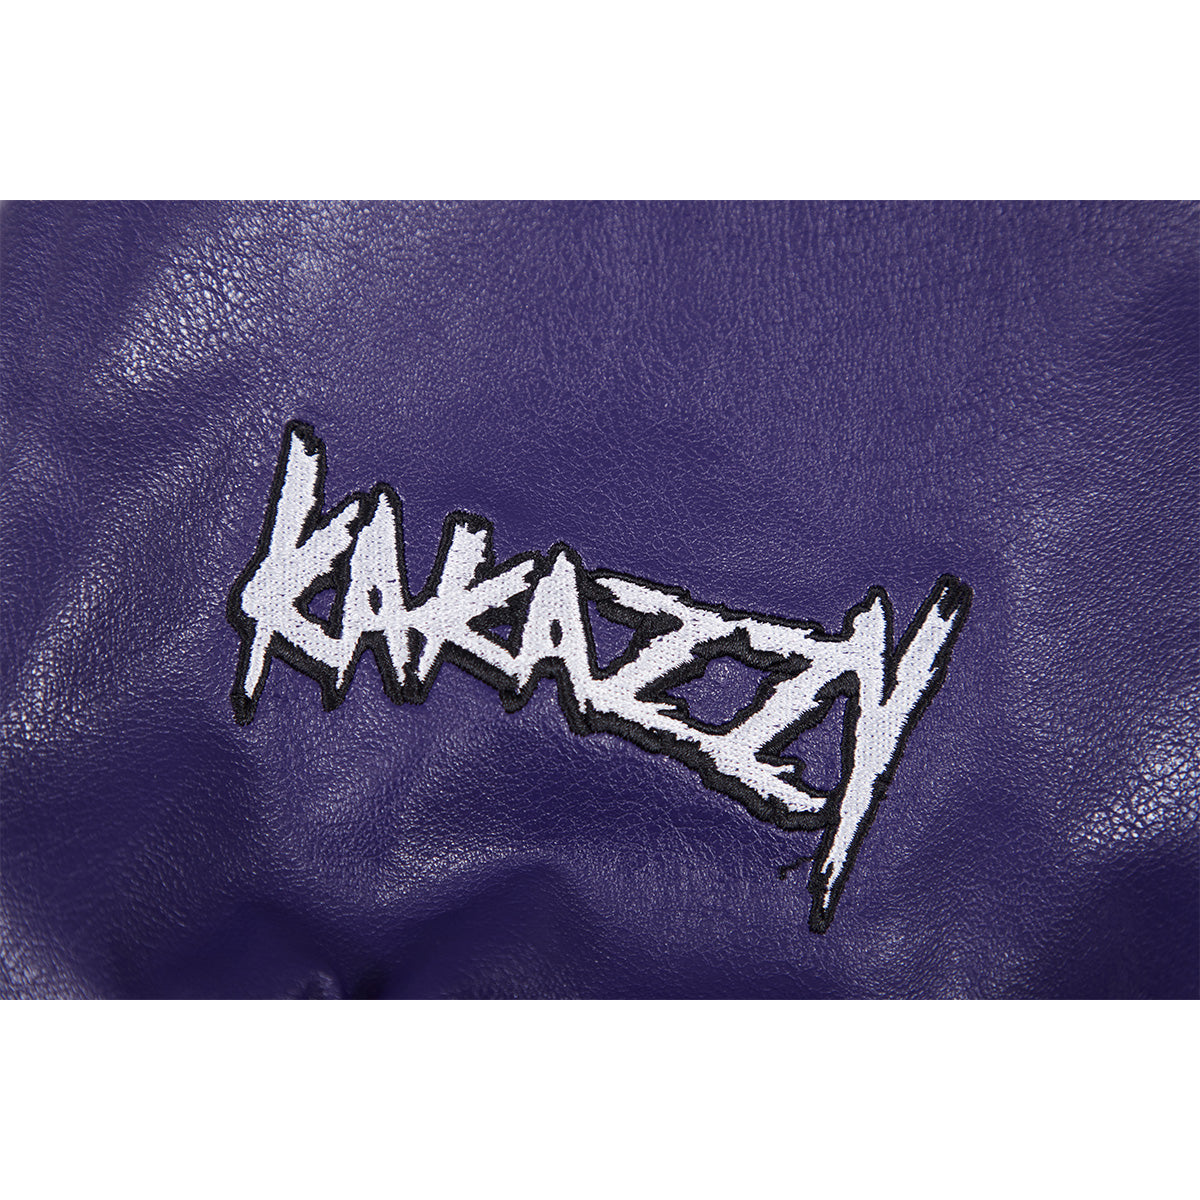 Kakazzy Leather Jacket Purple